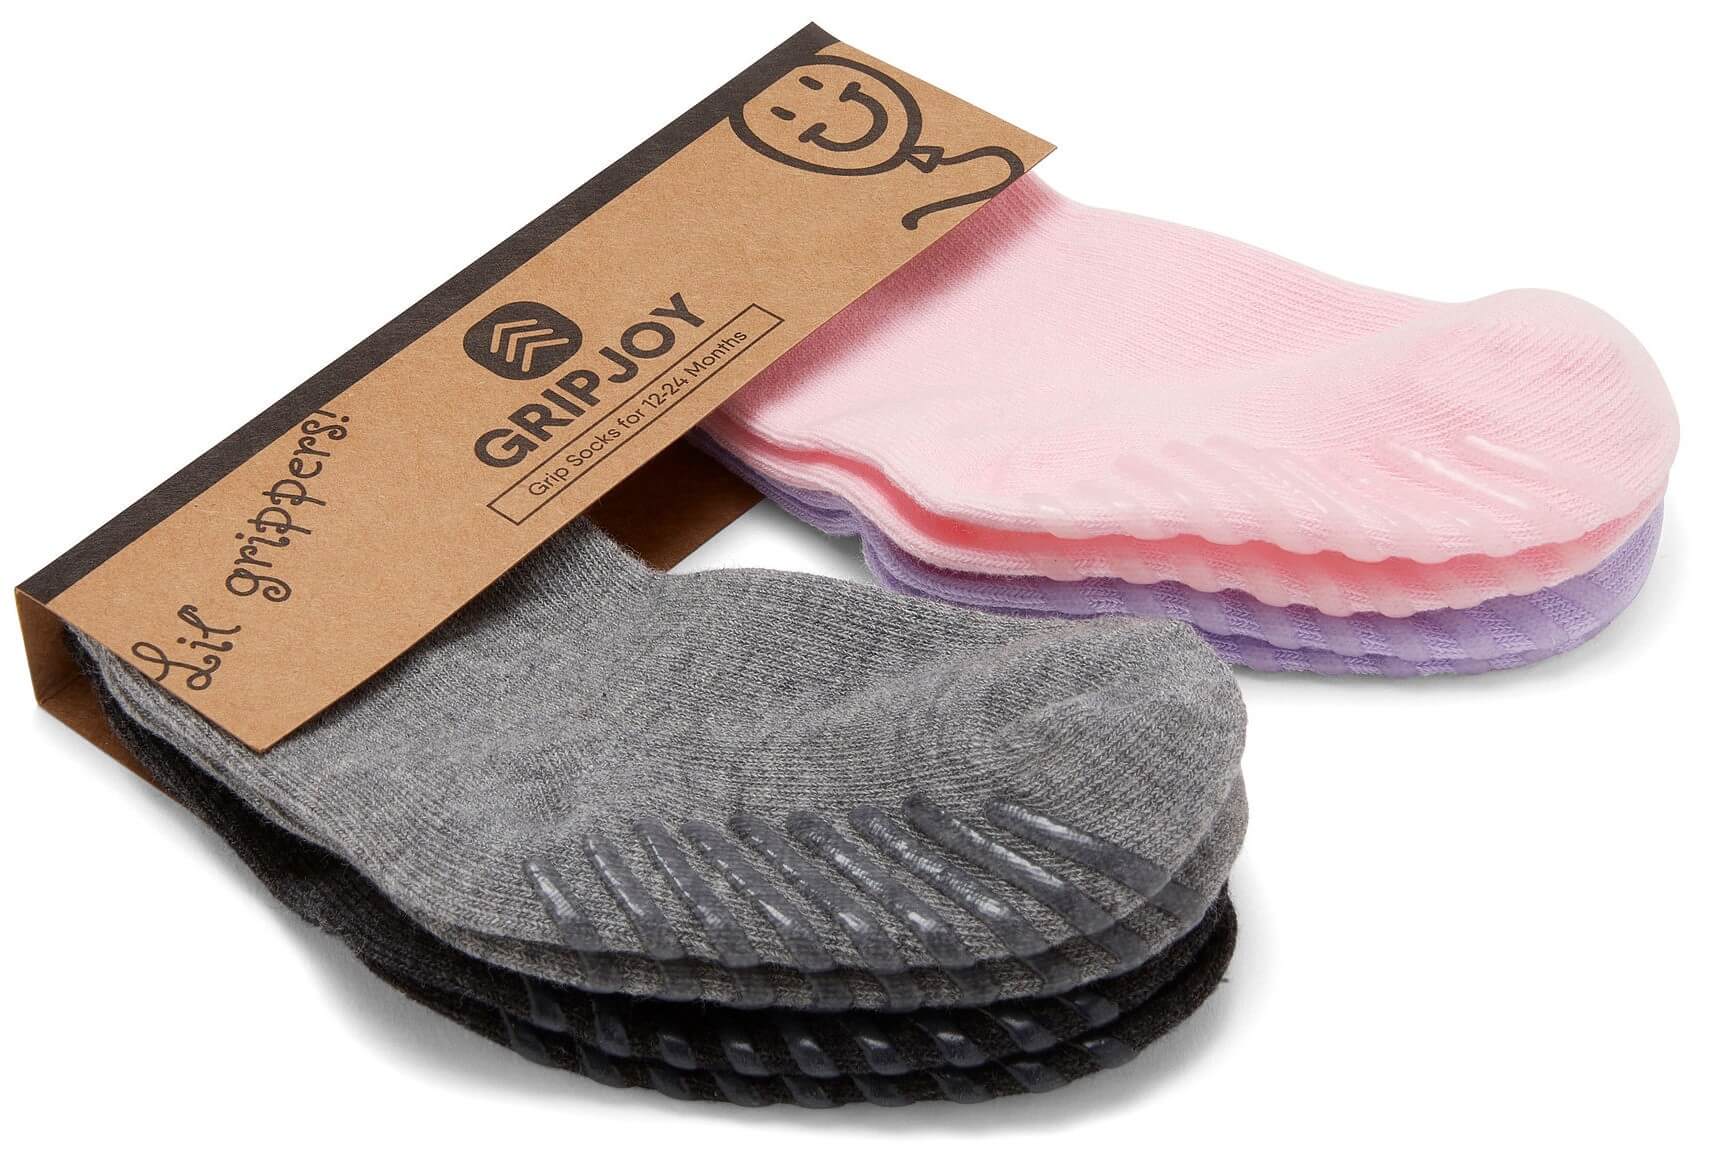 Grip Socks for Toddlers & Kids 12-24 Months 4-Pack - Gripjoy Socks